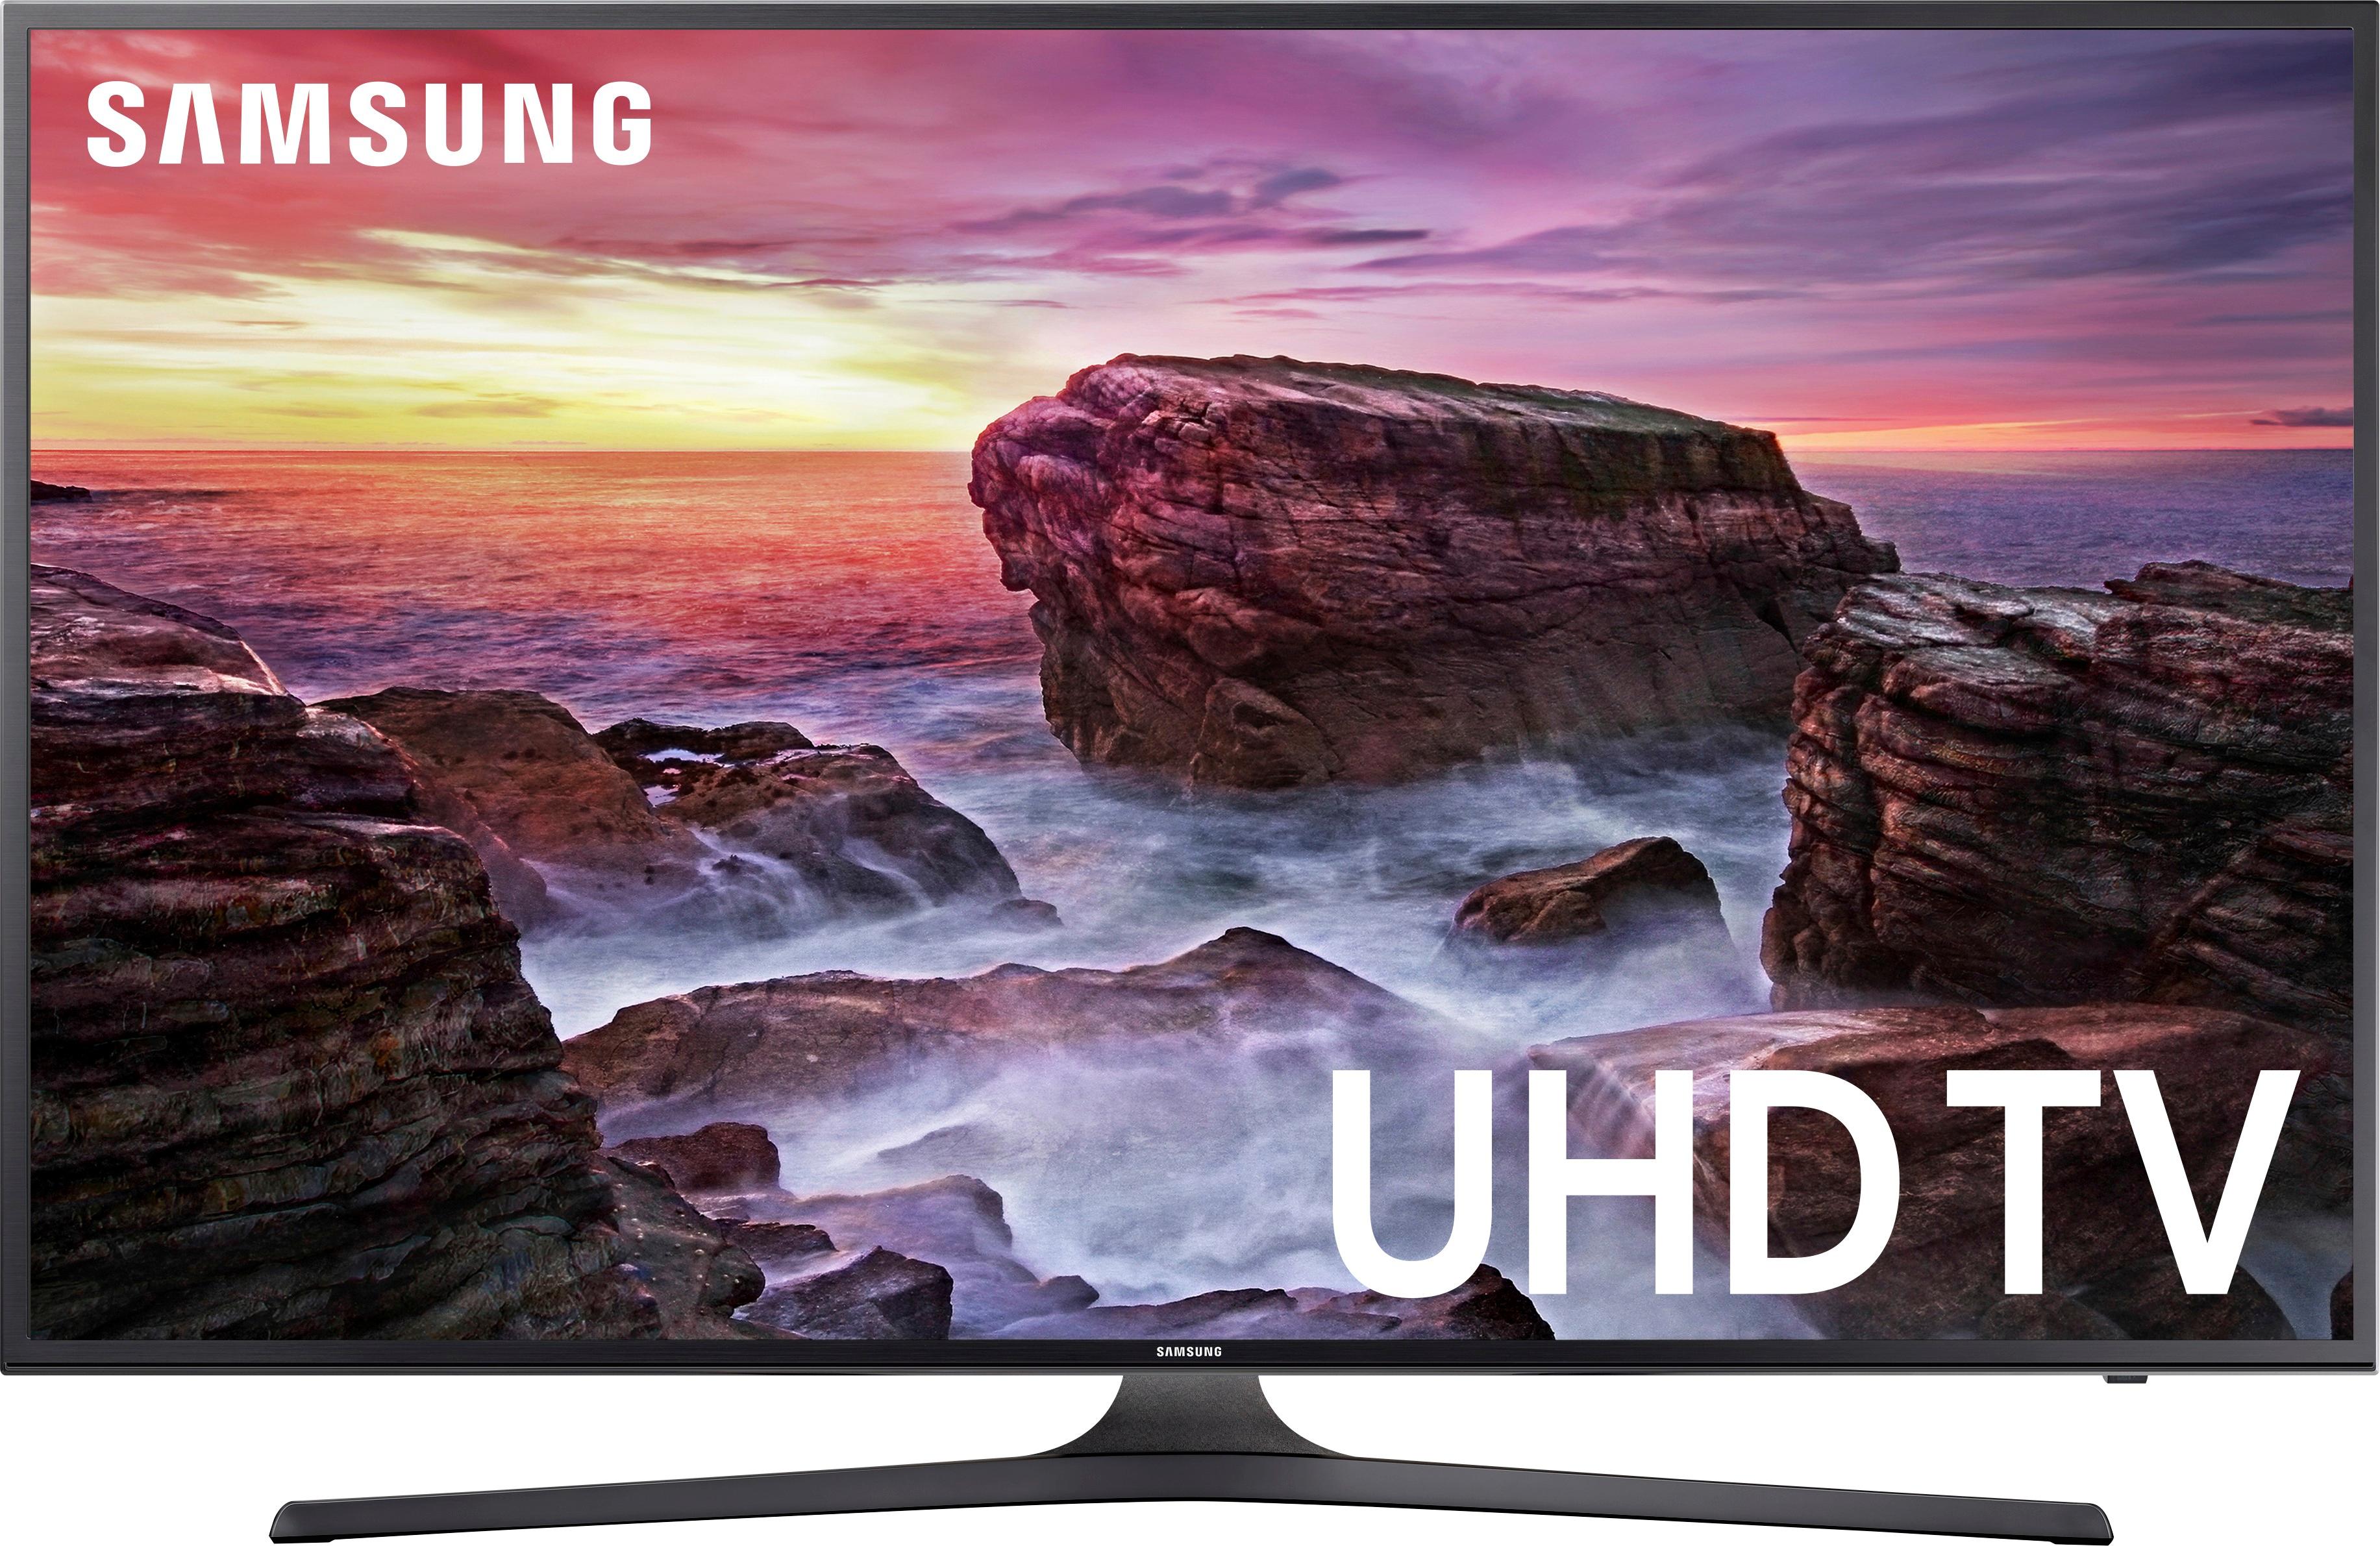 Alfabeto Navidad Figura Samsung 40" Class LED MU6290 Series 2160p Smart 4K Ultra HD TV with HDR  UN40MU6290FXZA - Best Buy